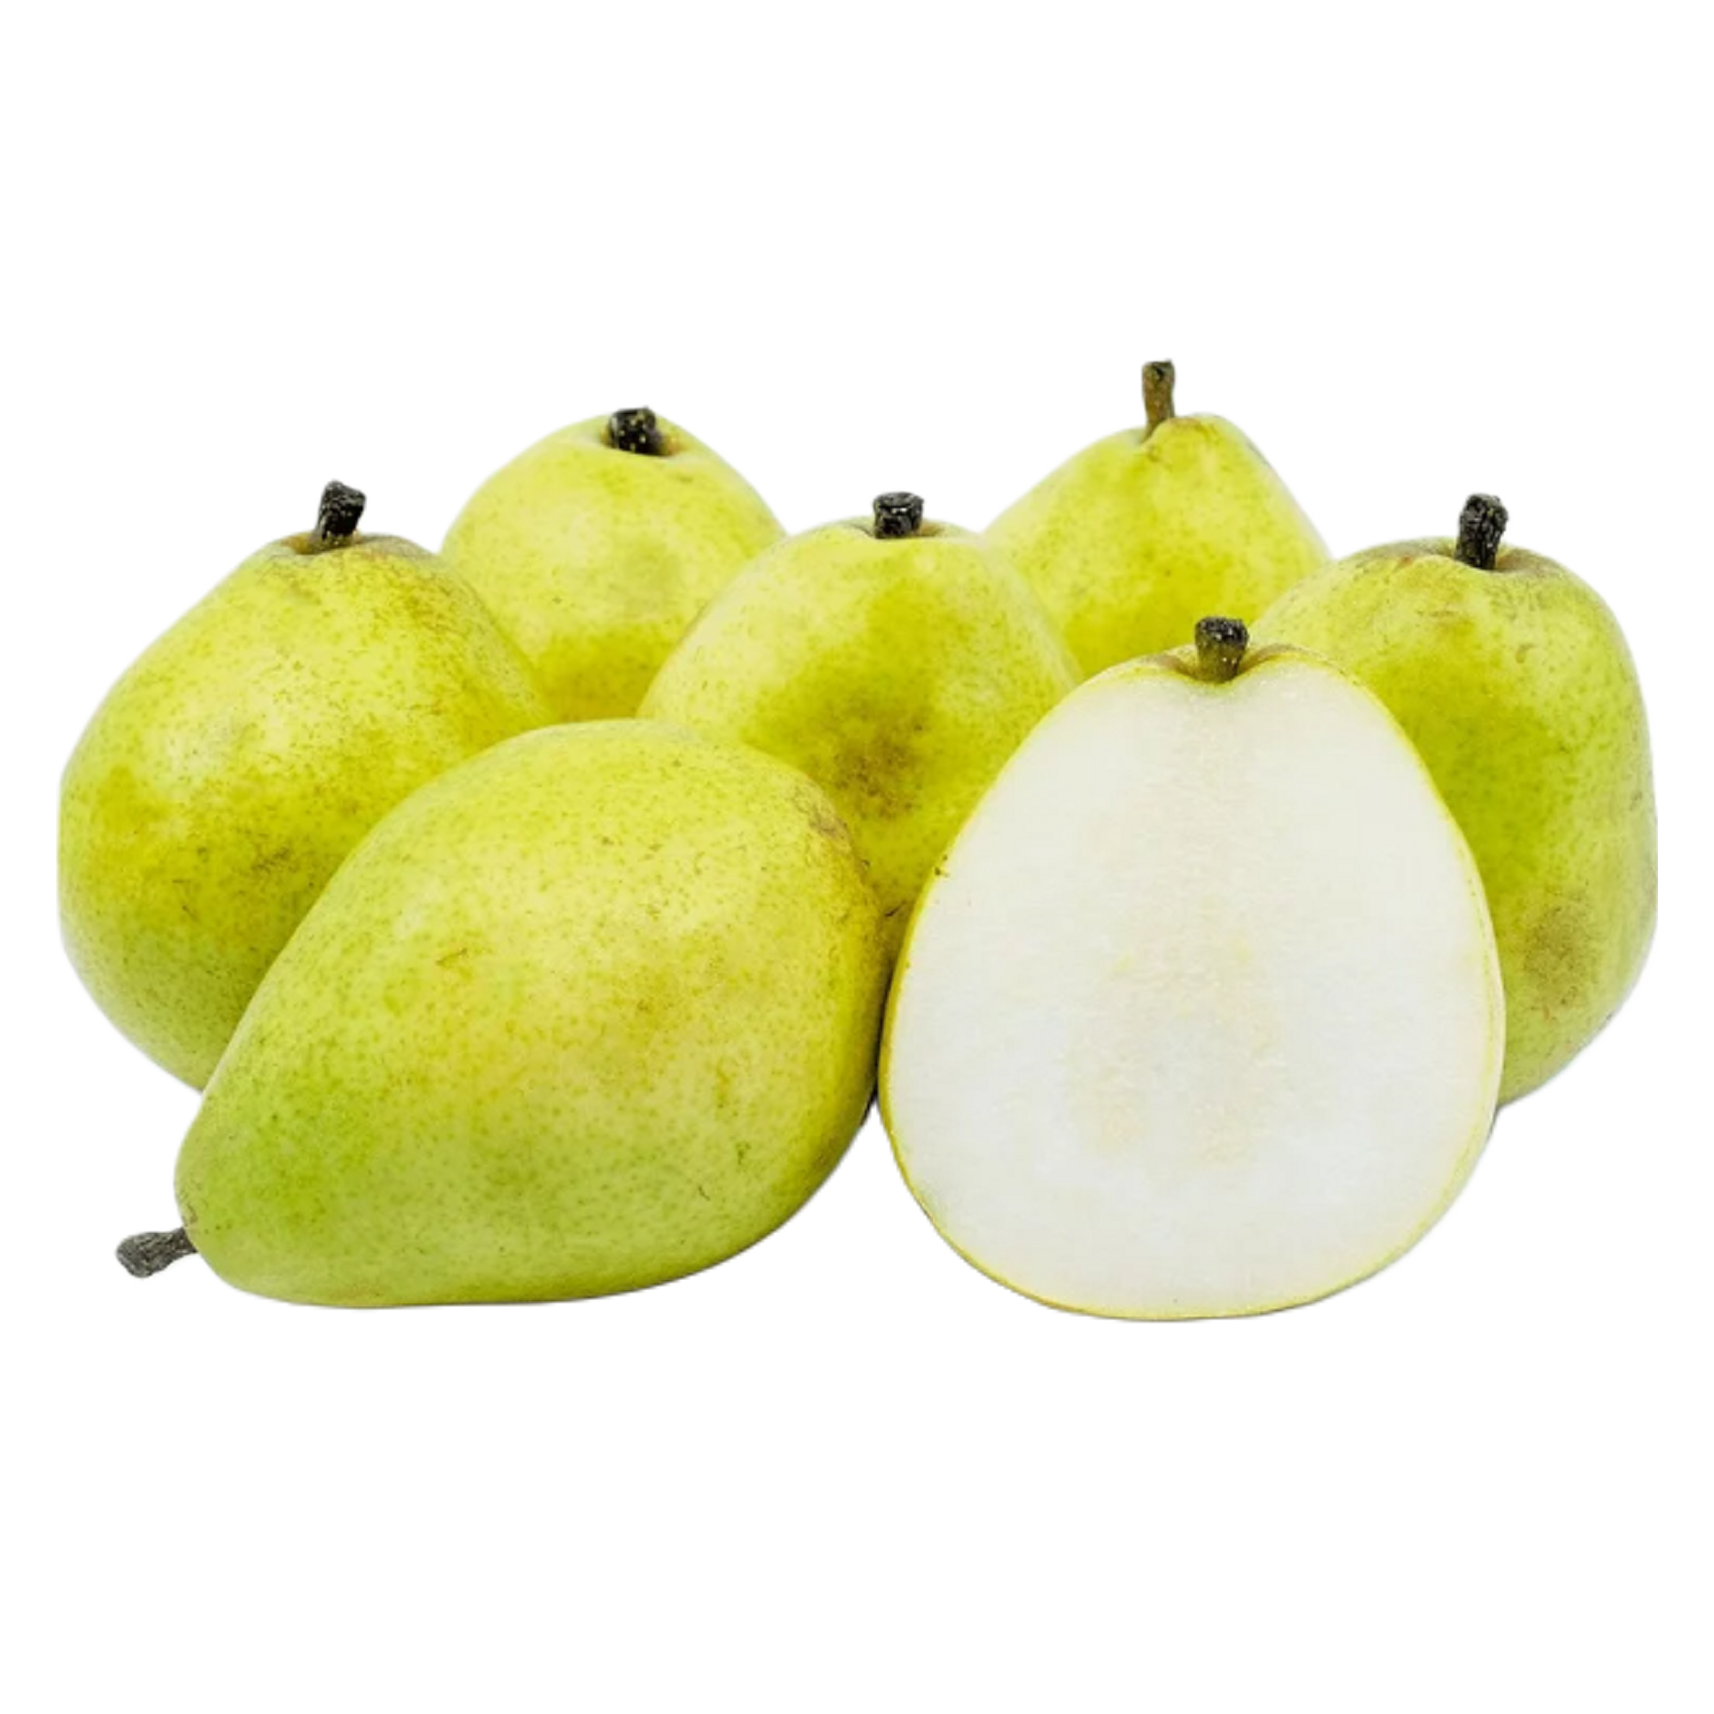 Organic Green D'anjou Pears - 2lb